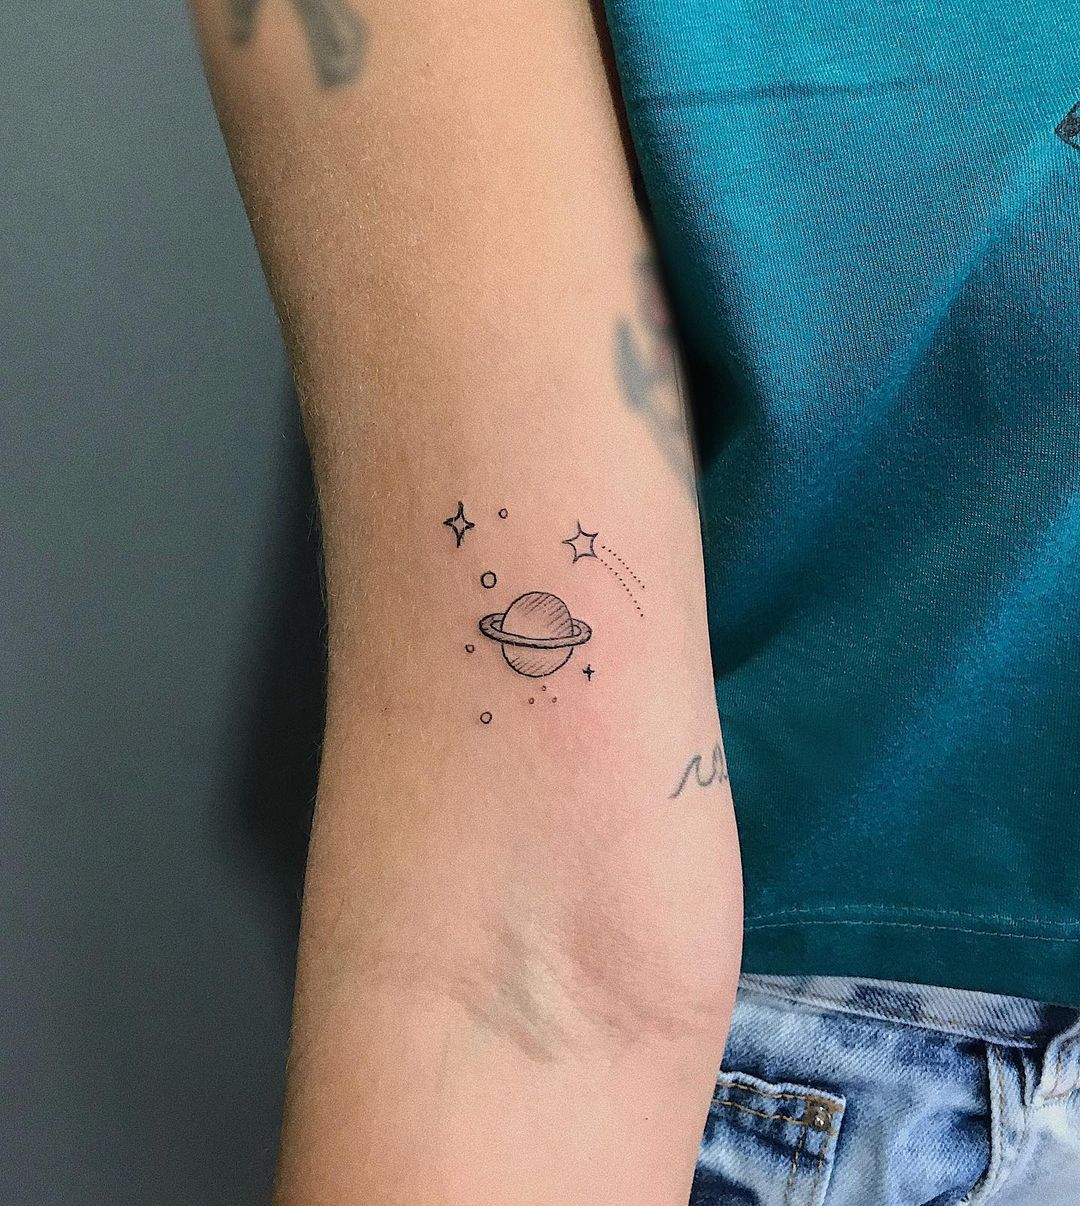 Tatuaje pequeño para el brazo